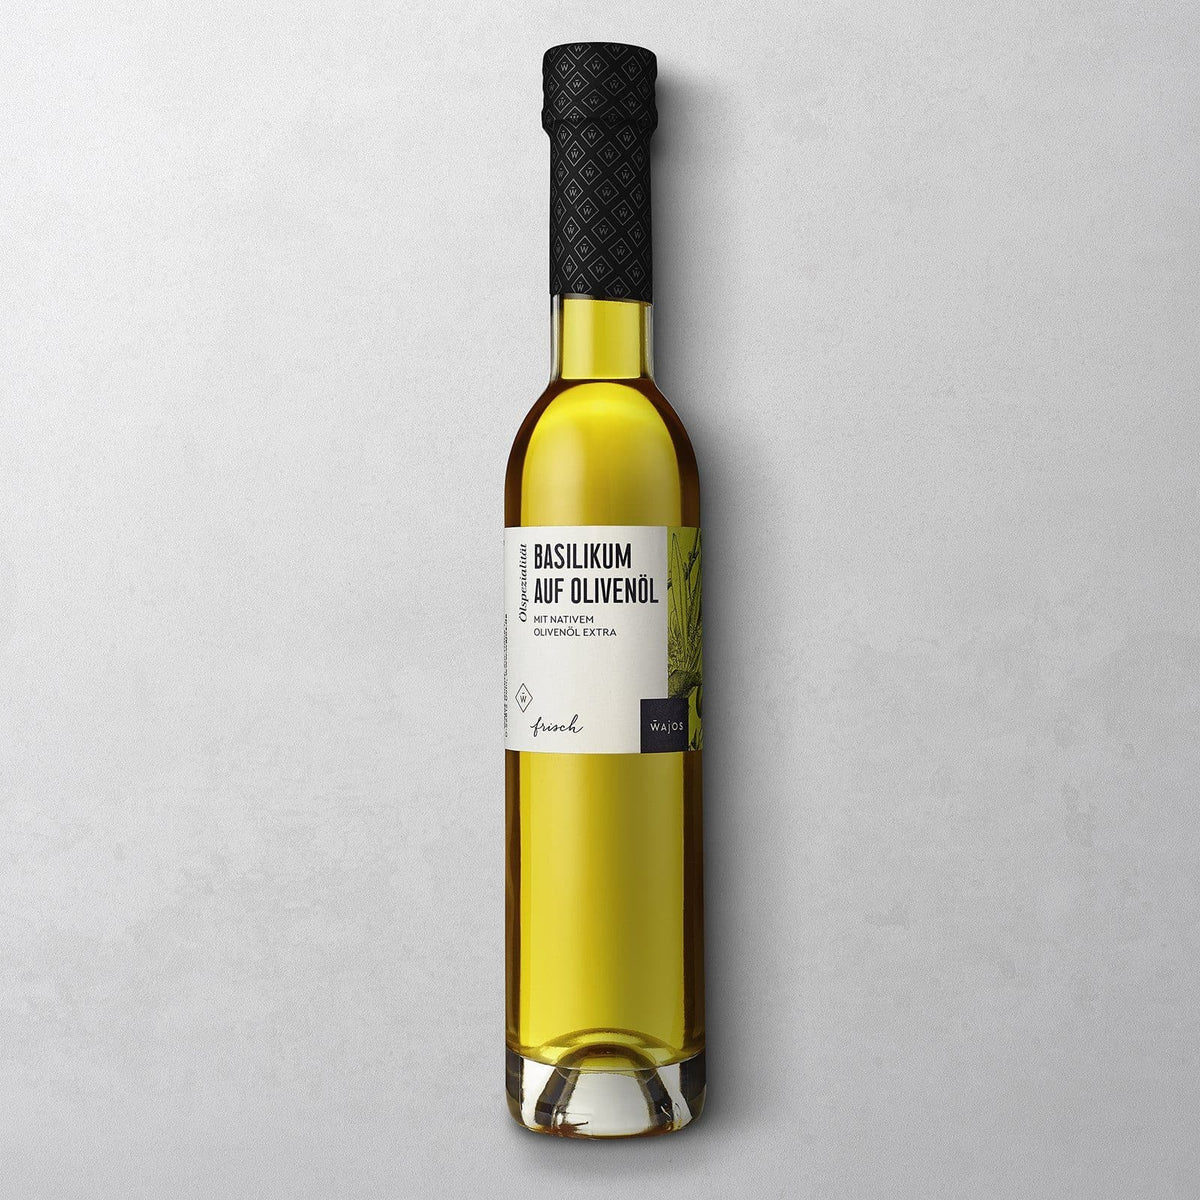 Basilikum auf Olivenöl 100ml - Olivenölzubereitung